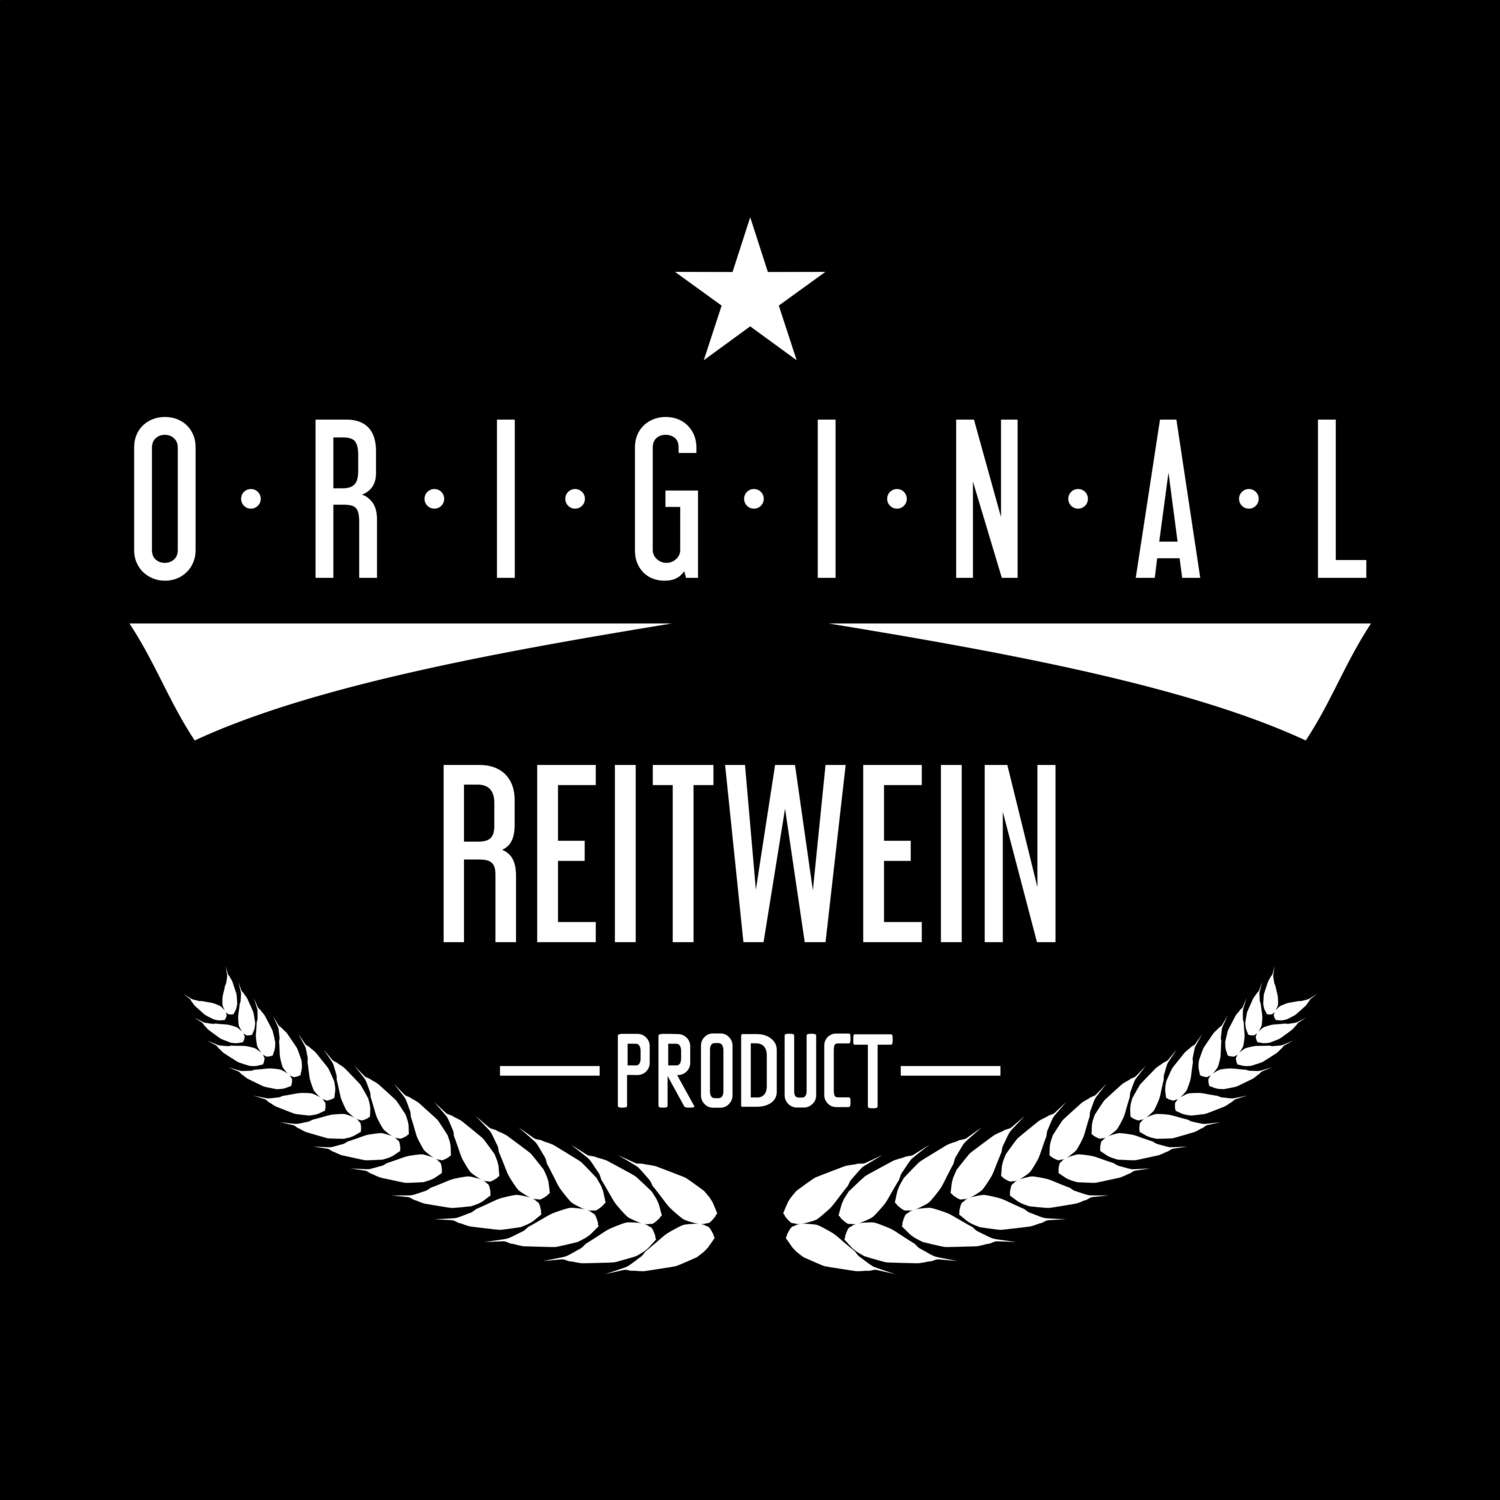 Reitwein T-Shirt »Original Product«